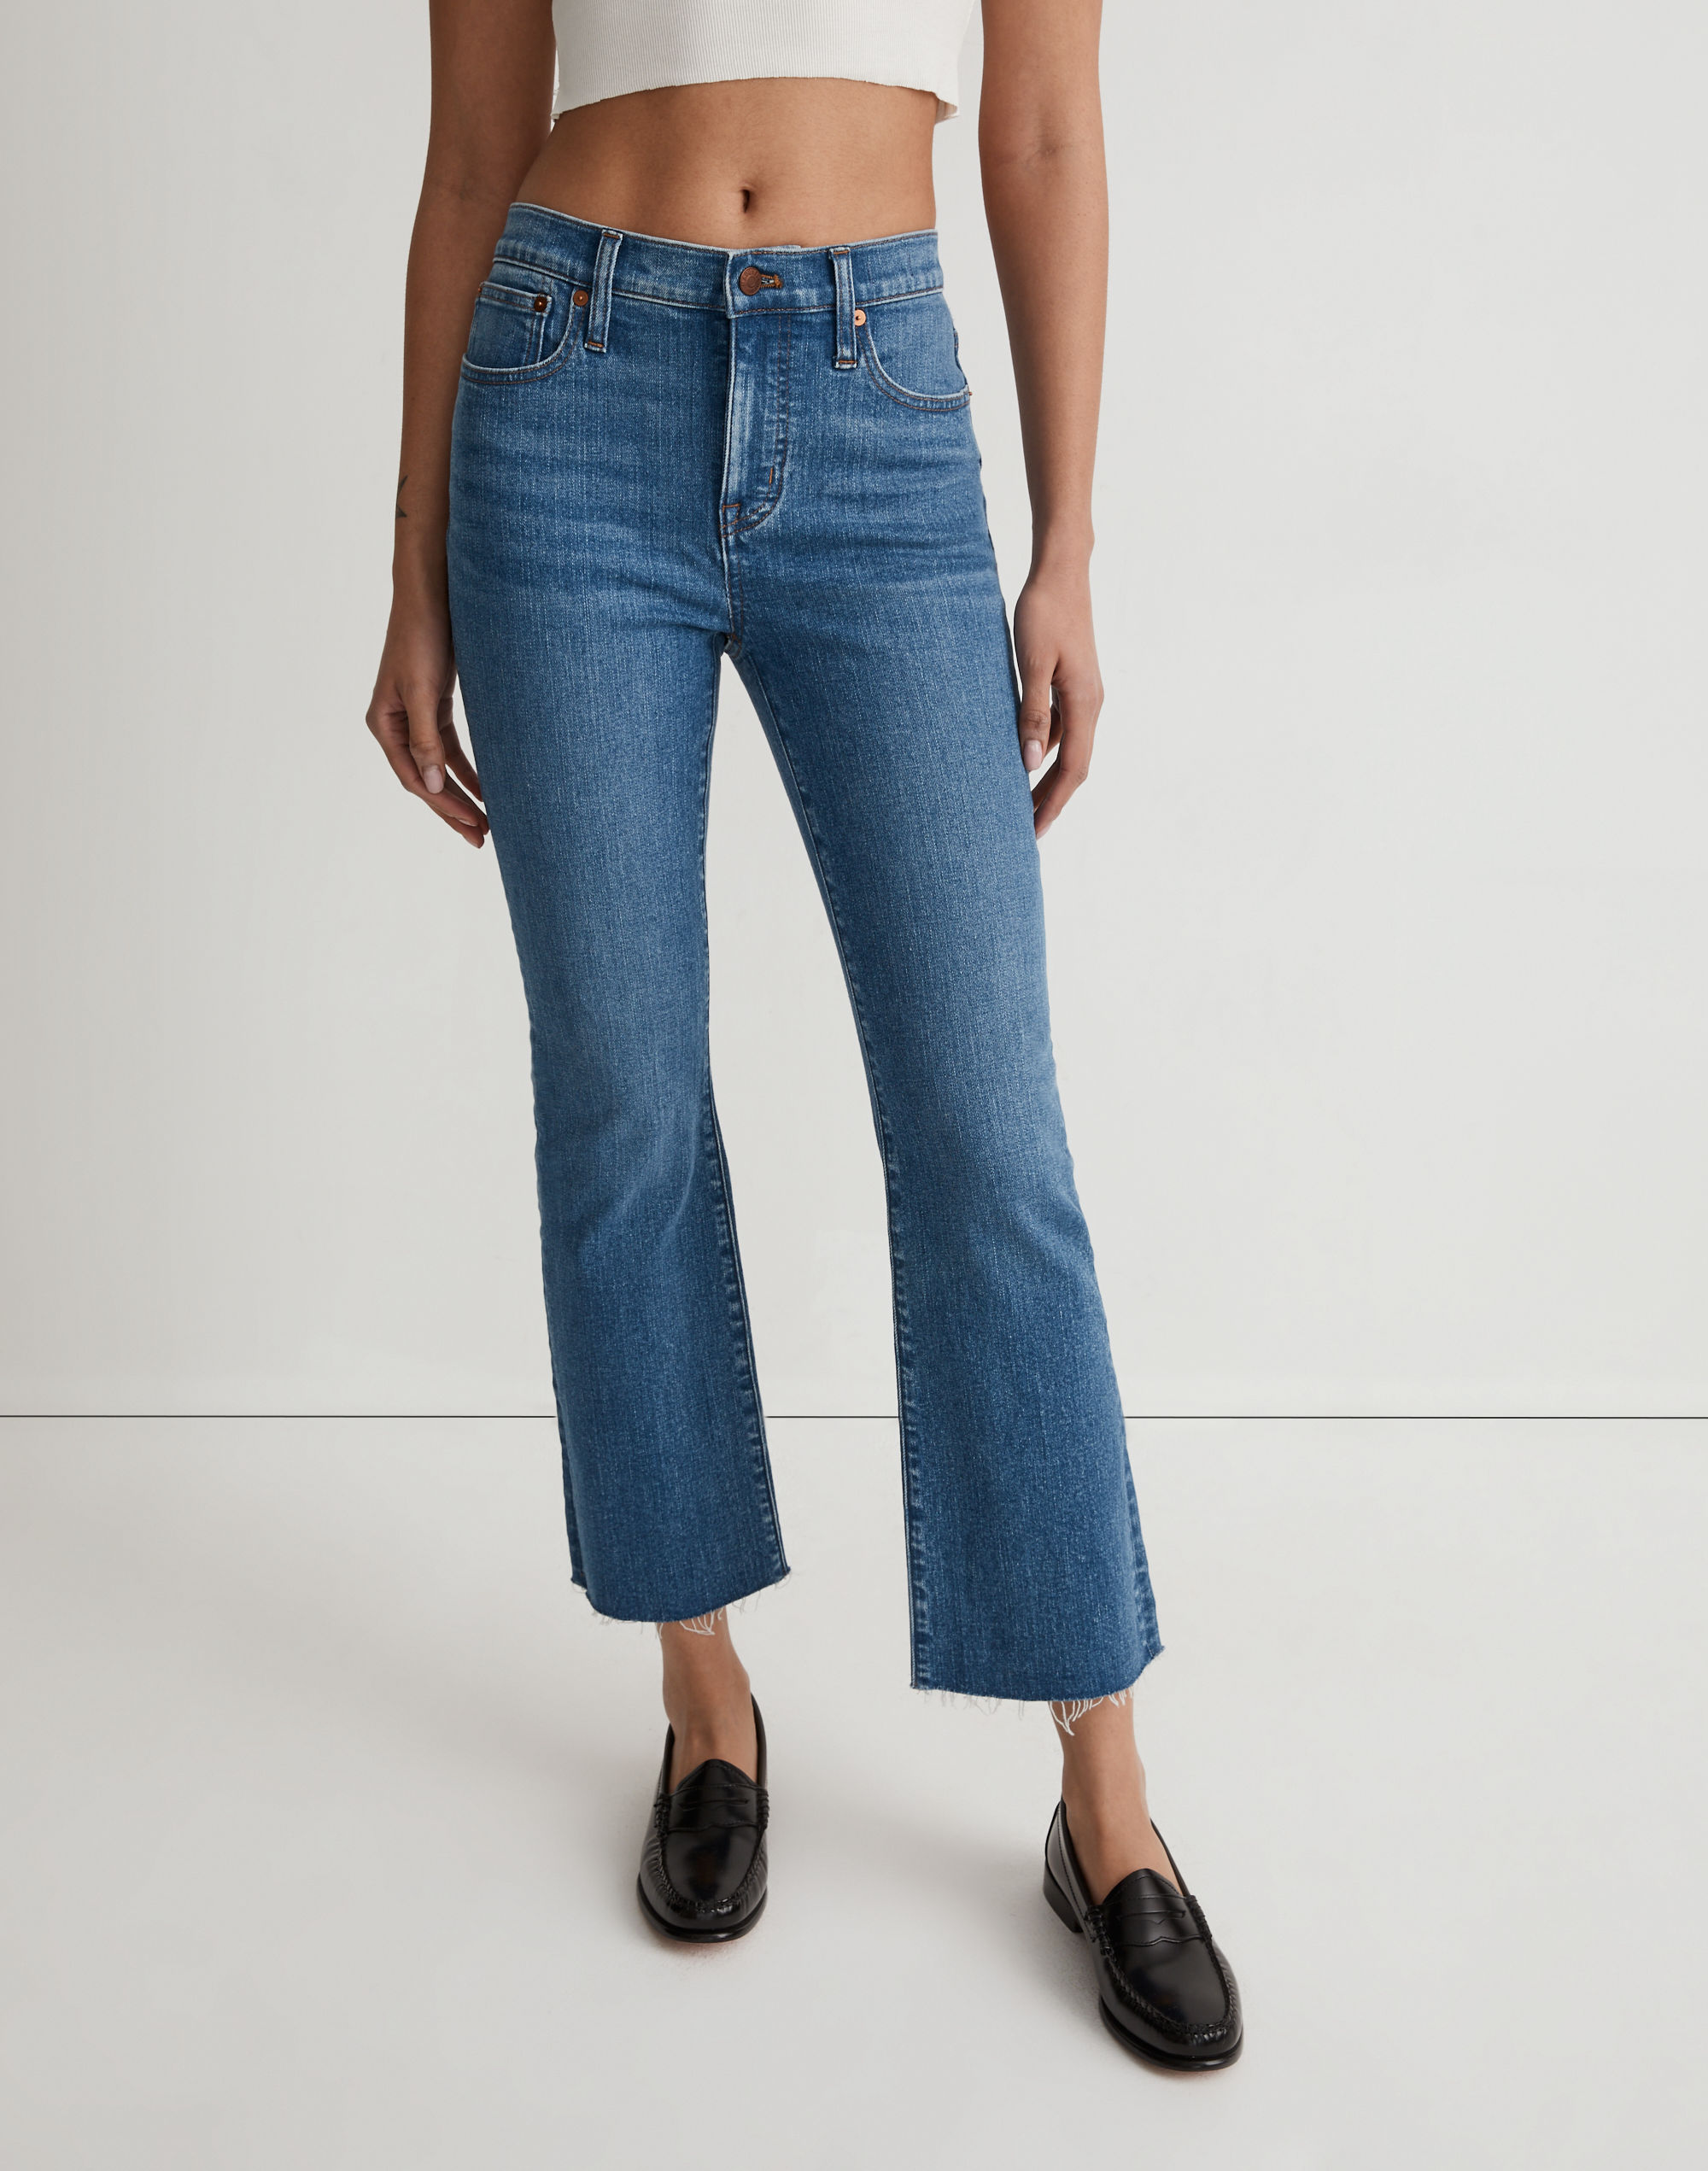 Taller Kick Out Crop Jeans Cherryville Wash: Raw-Hem Edition